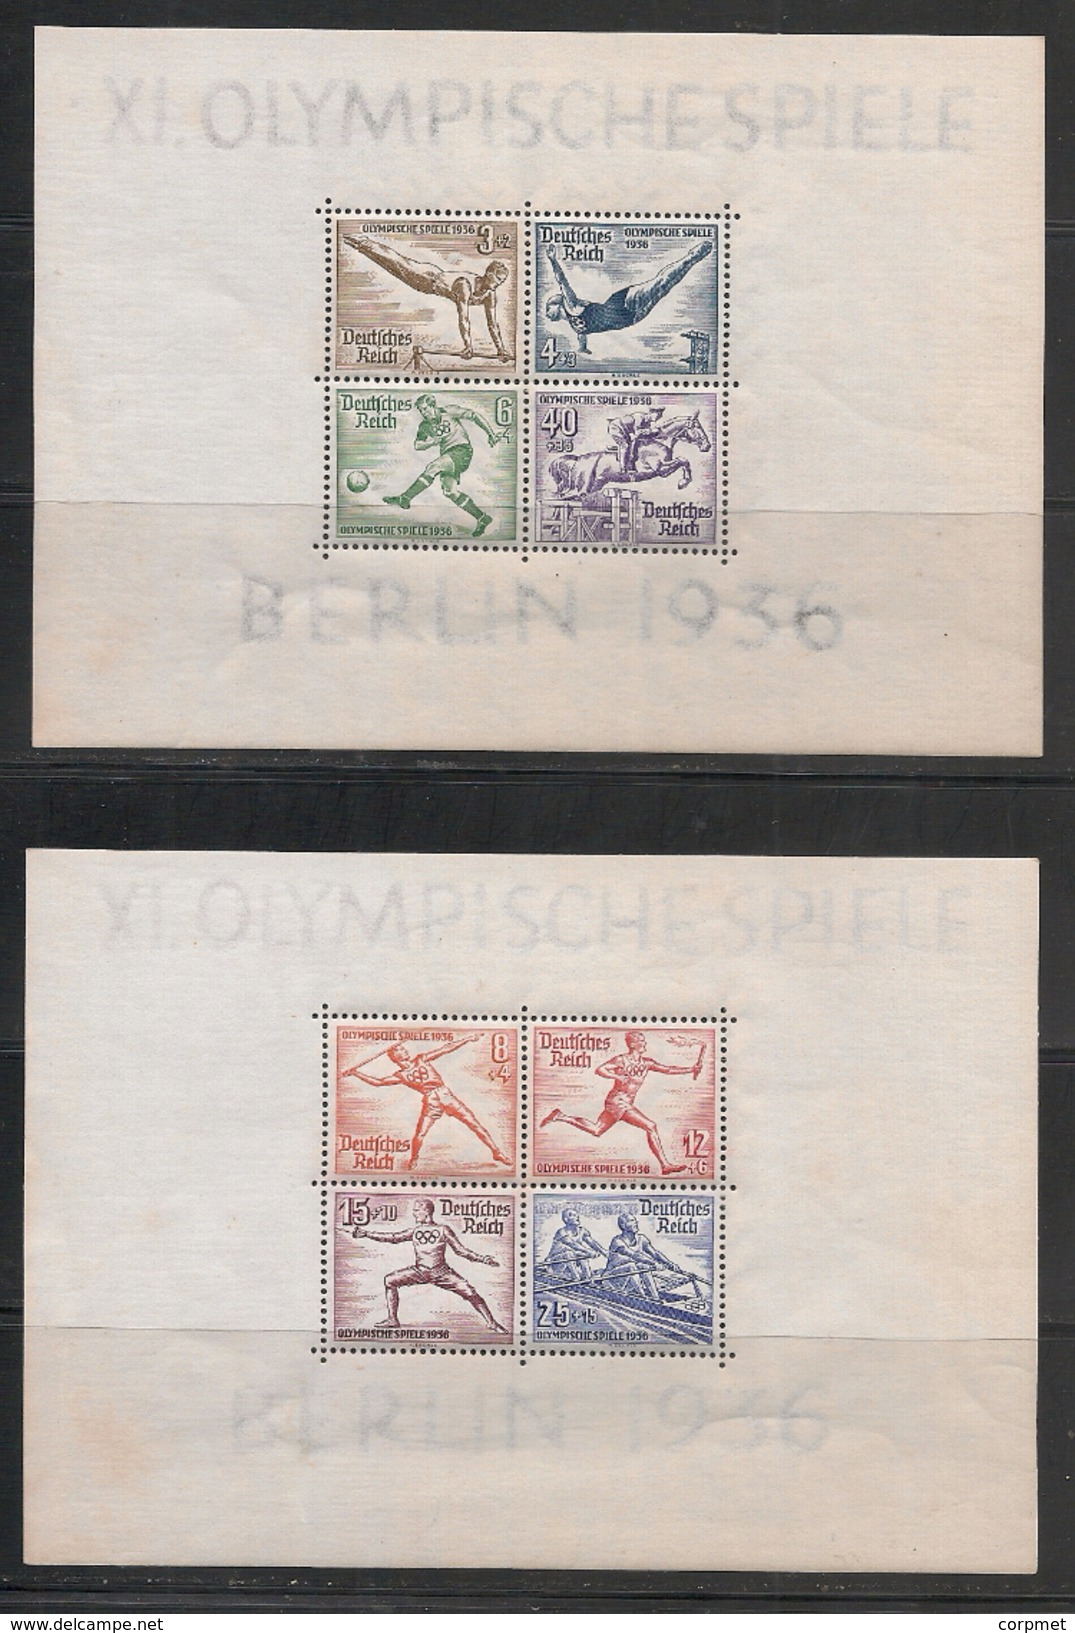 OLYMPIC GAMES - JEUX OLYMPIQUES - BERLIN 1936 - SOUVENIR SHEETS - Yvert # Bloc 4 -5 - ** MNH - Estate 1936: Berlino